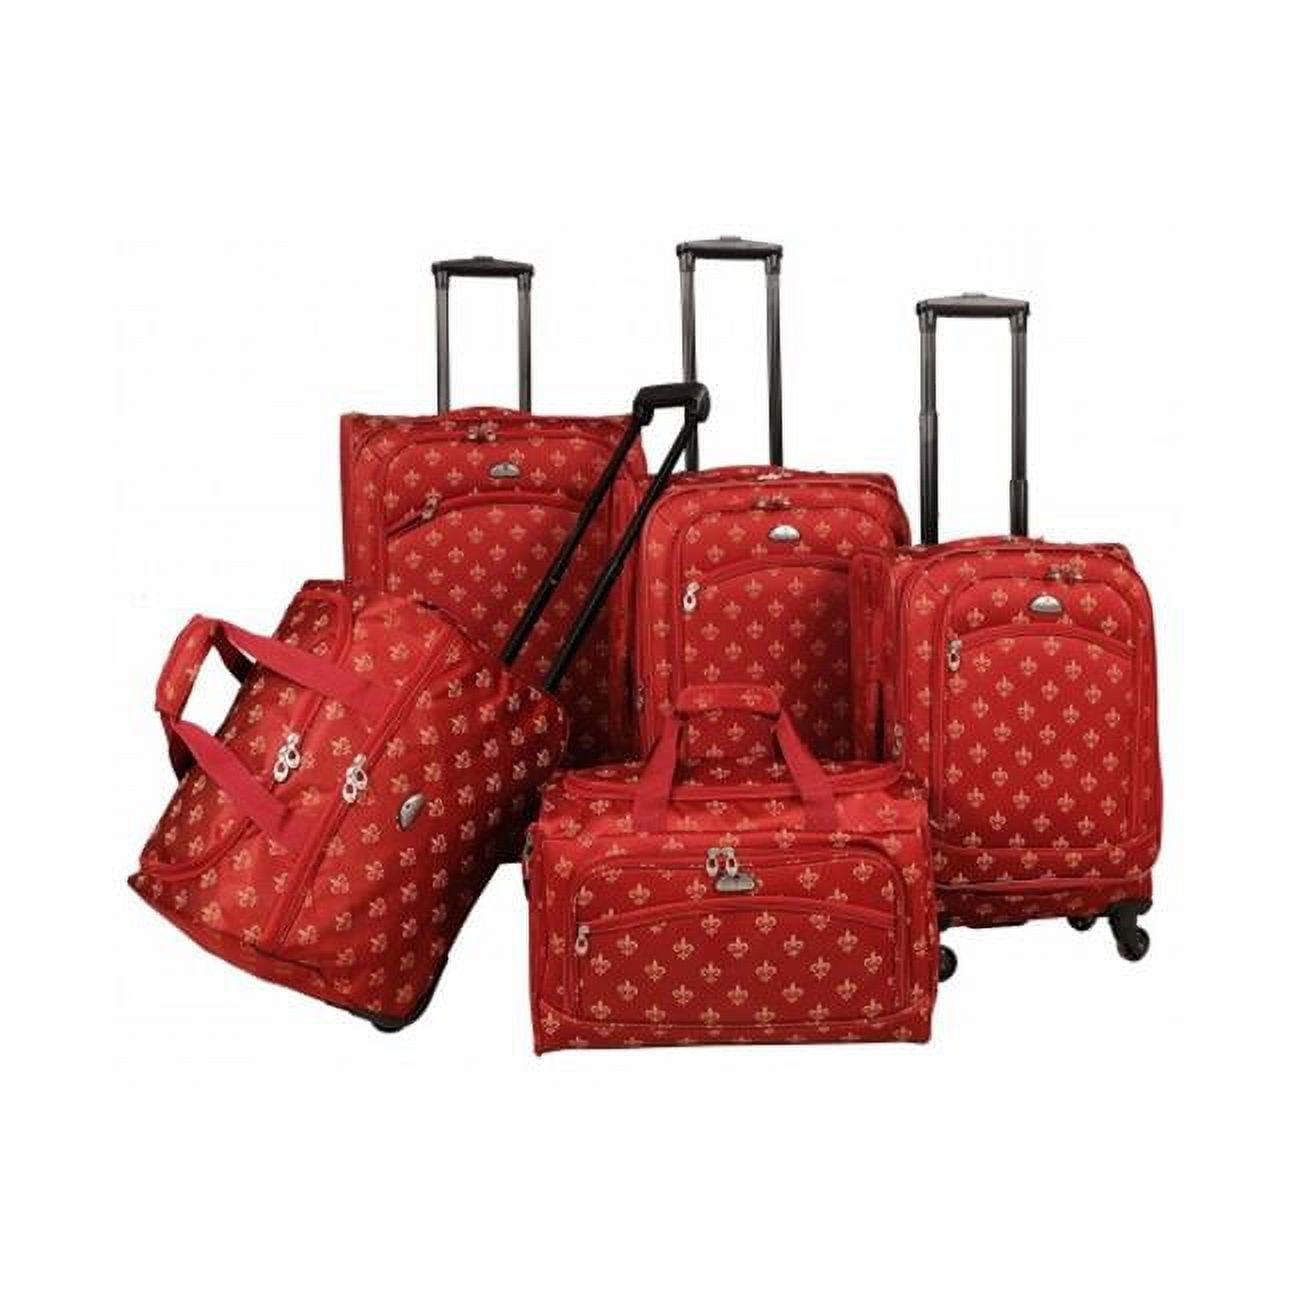 Picture of American Flyer 85700-5 RED AF Fleurdelis Luggage Set, Red - 5 Piece